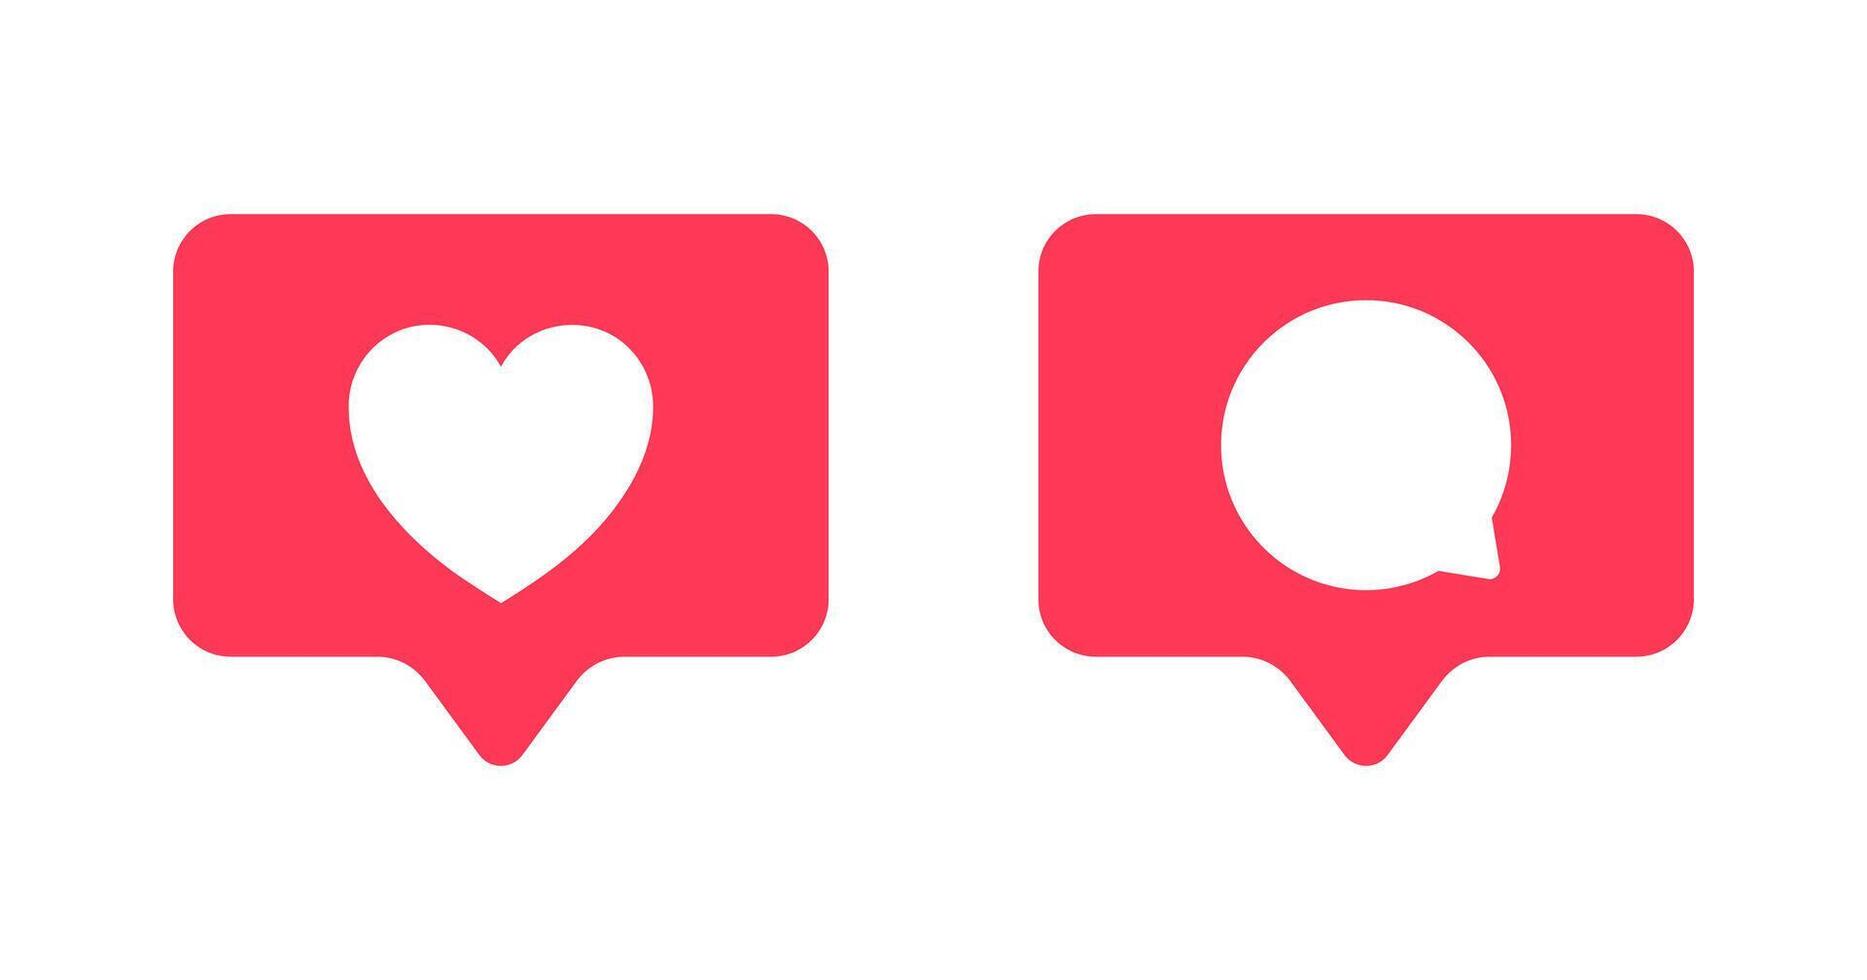 como, comentario iconos social medios de comunicación iconos social medios de comunicación botones. como, comentario botones vector